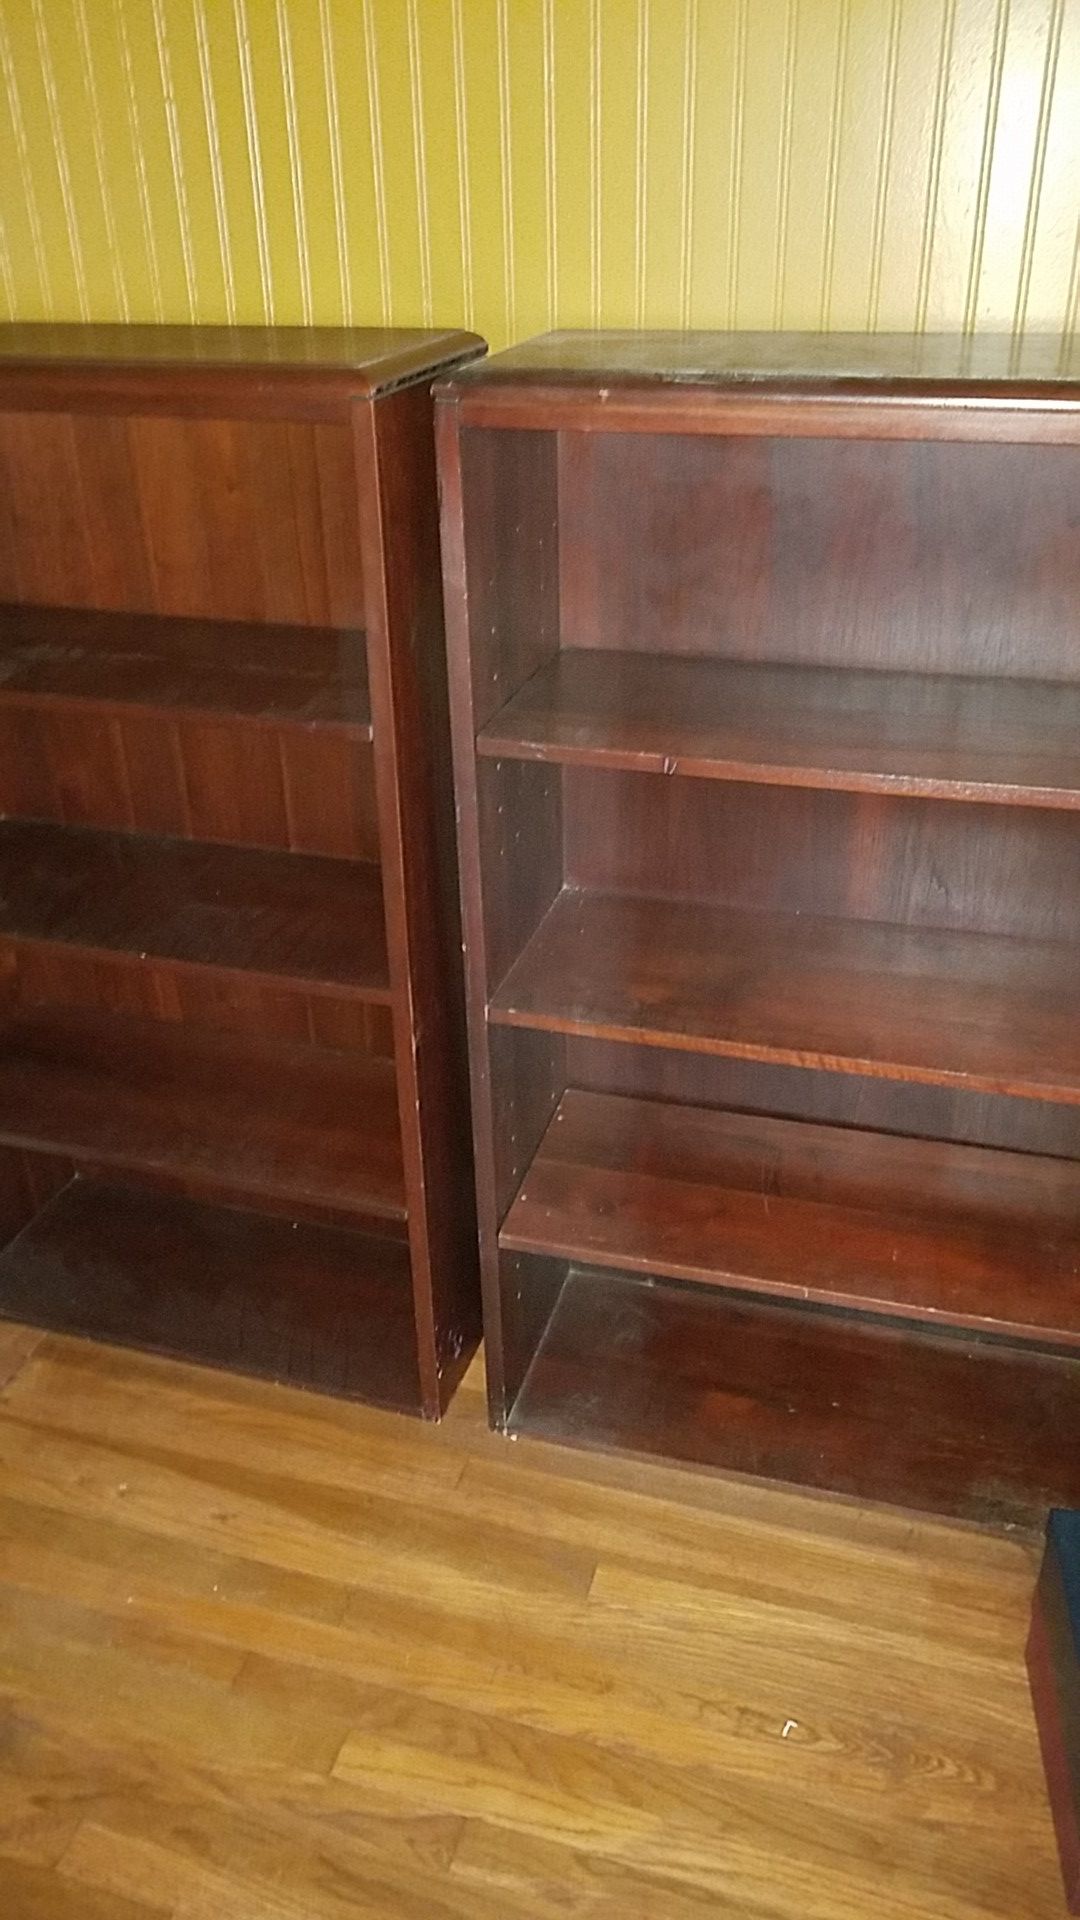 Matching bookshelves